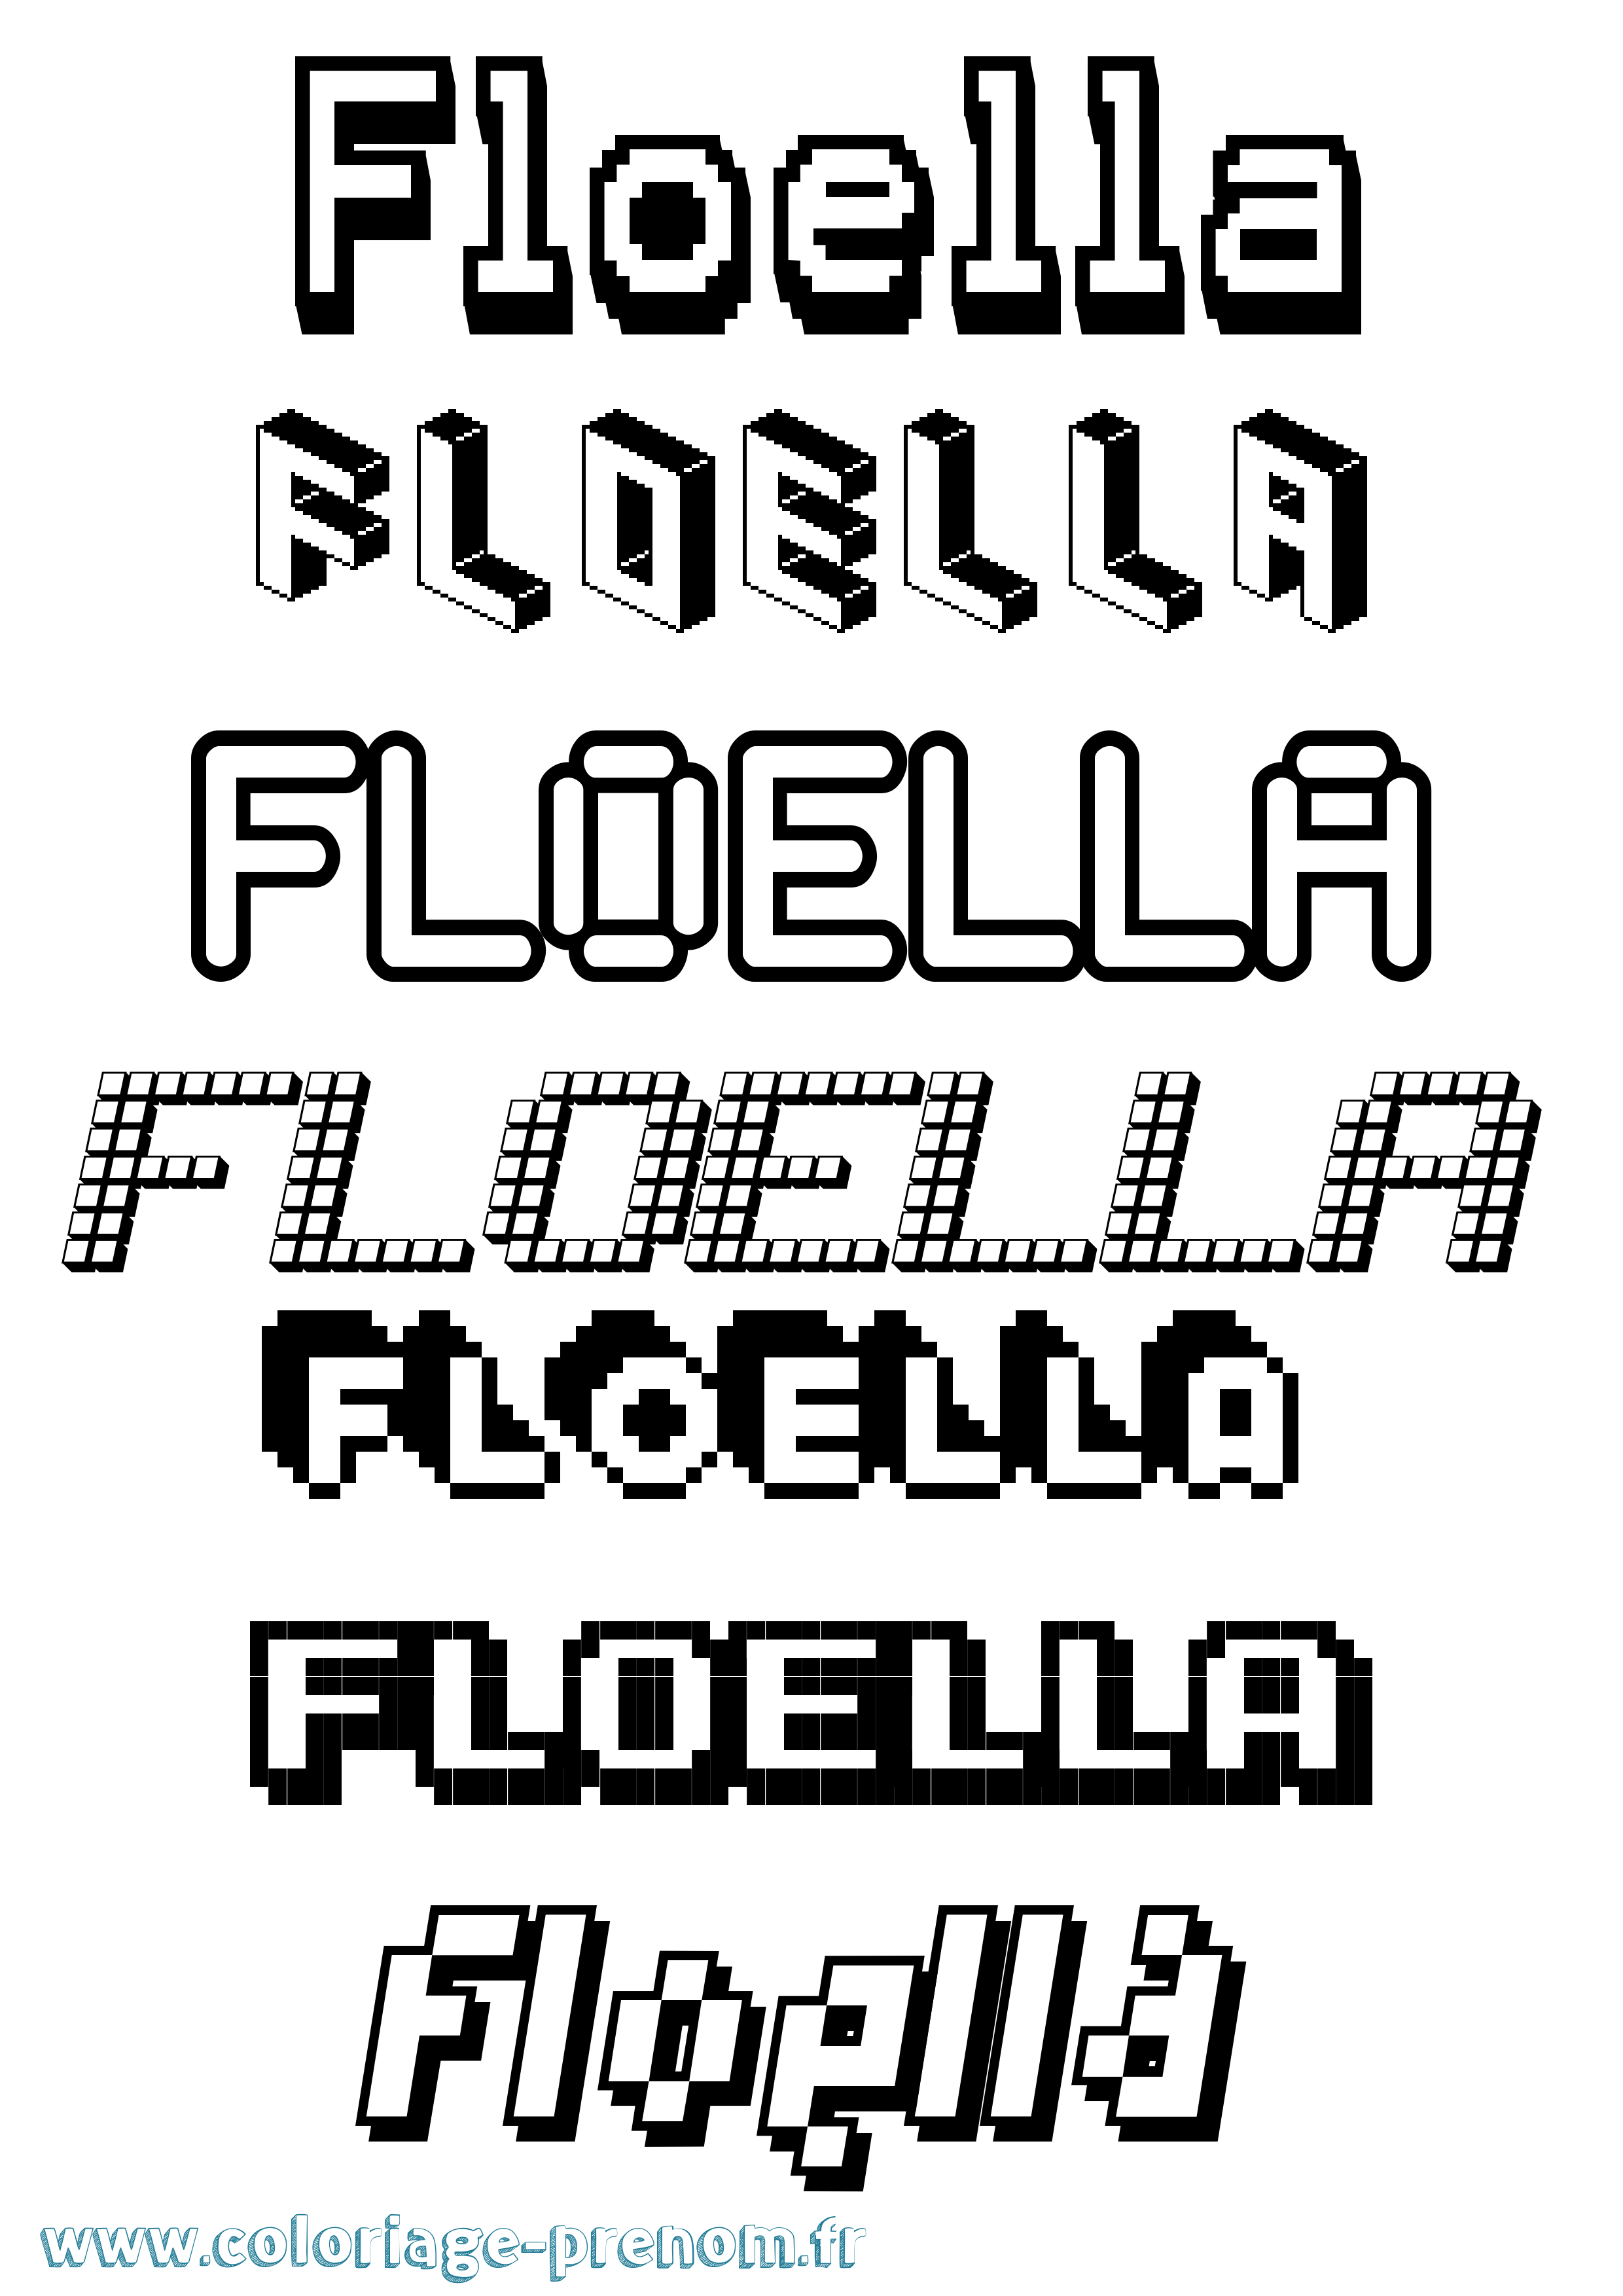 Coloriage prénom Floella Pixel